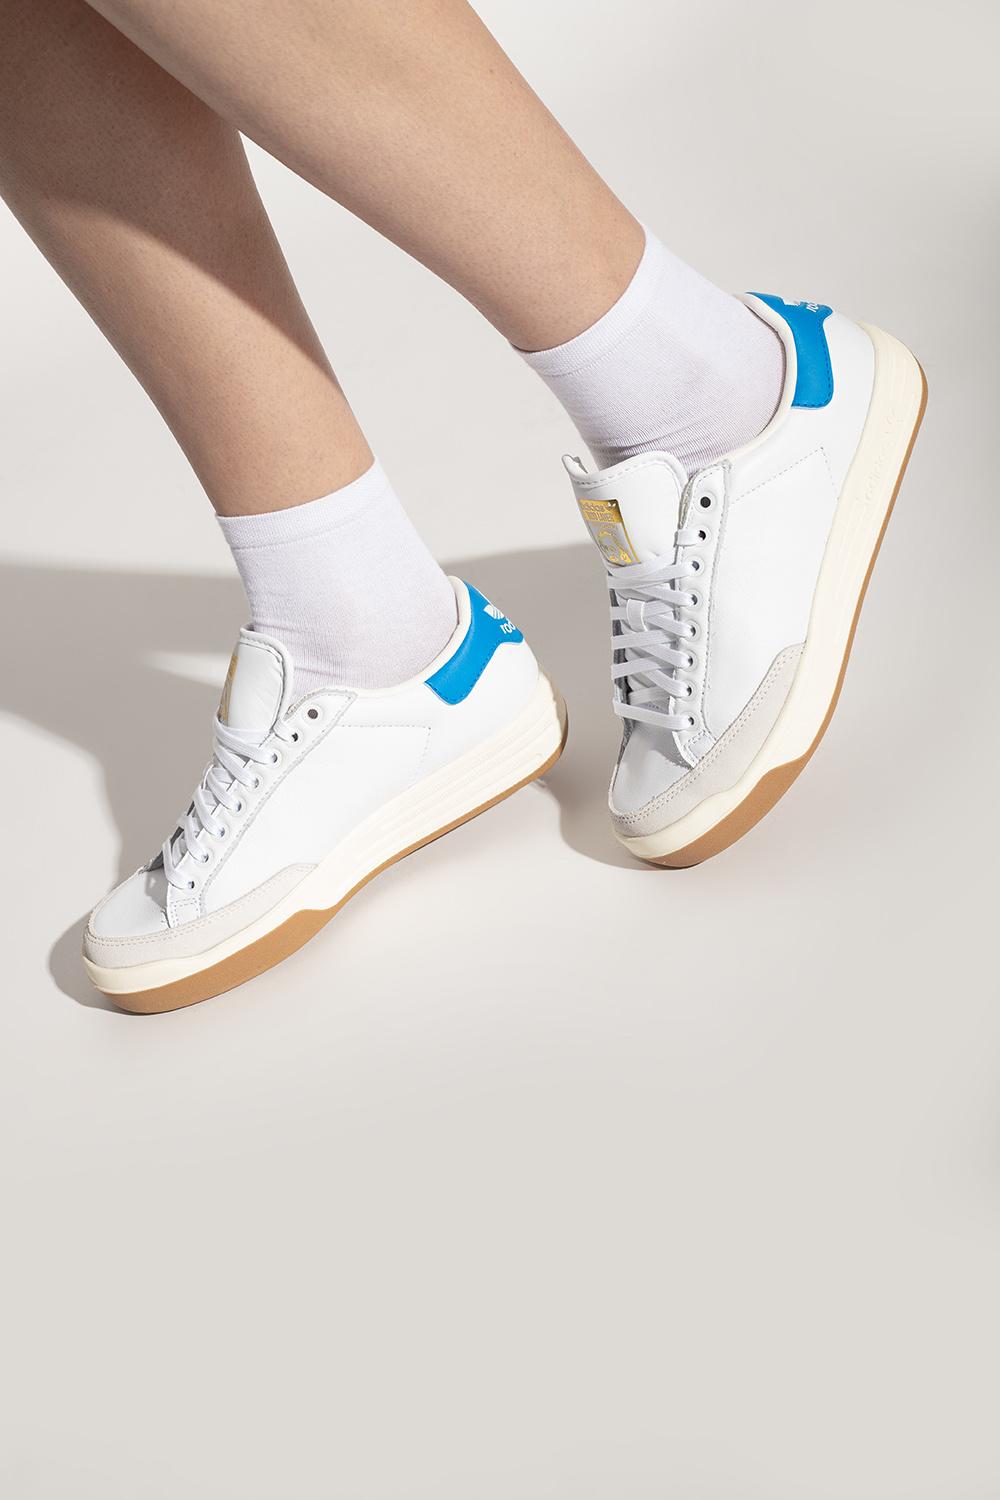 adidas Originals 'rod Laver' Sneakers in | Lyst